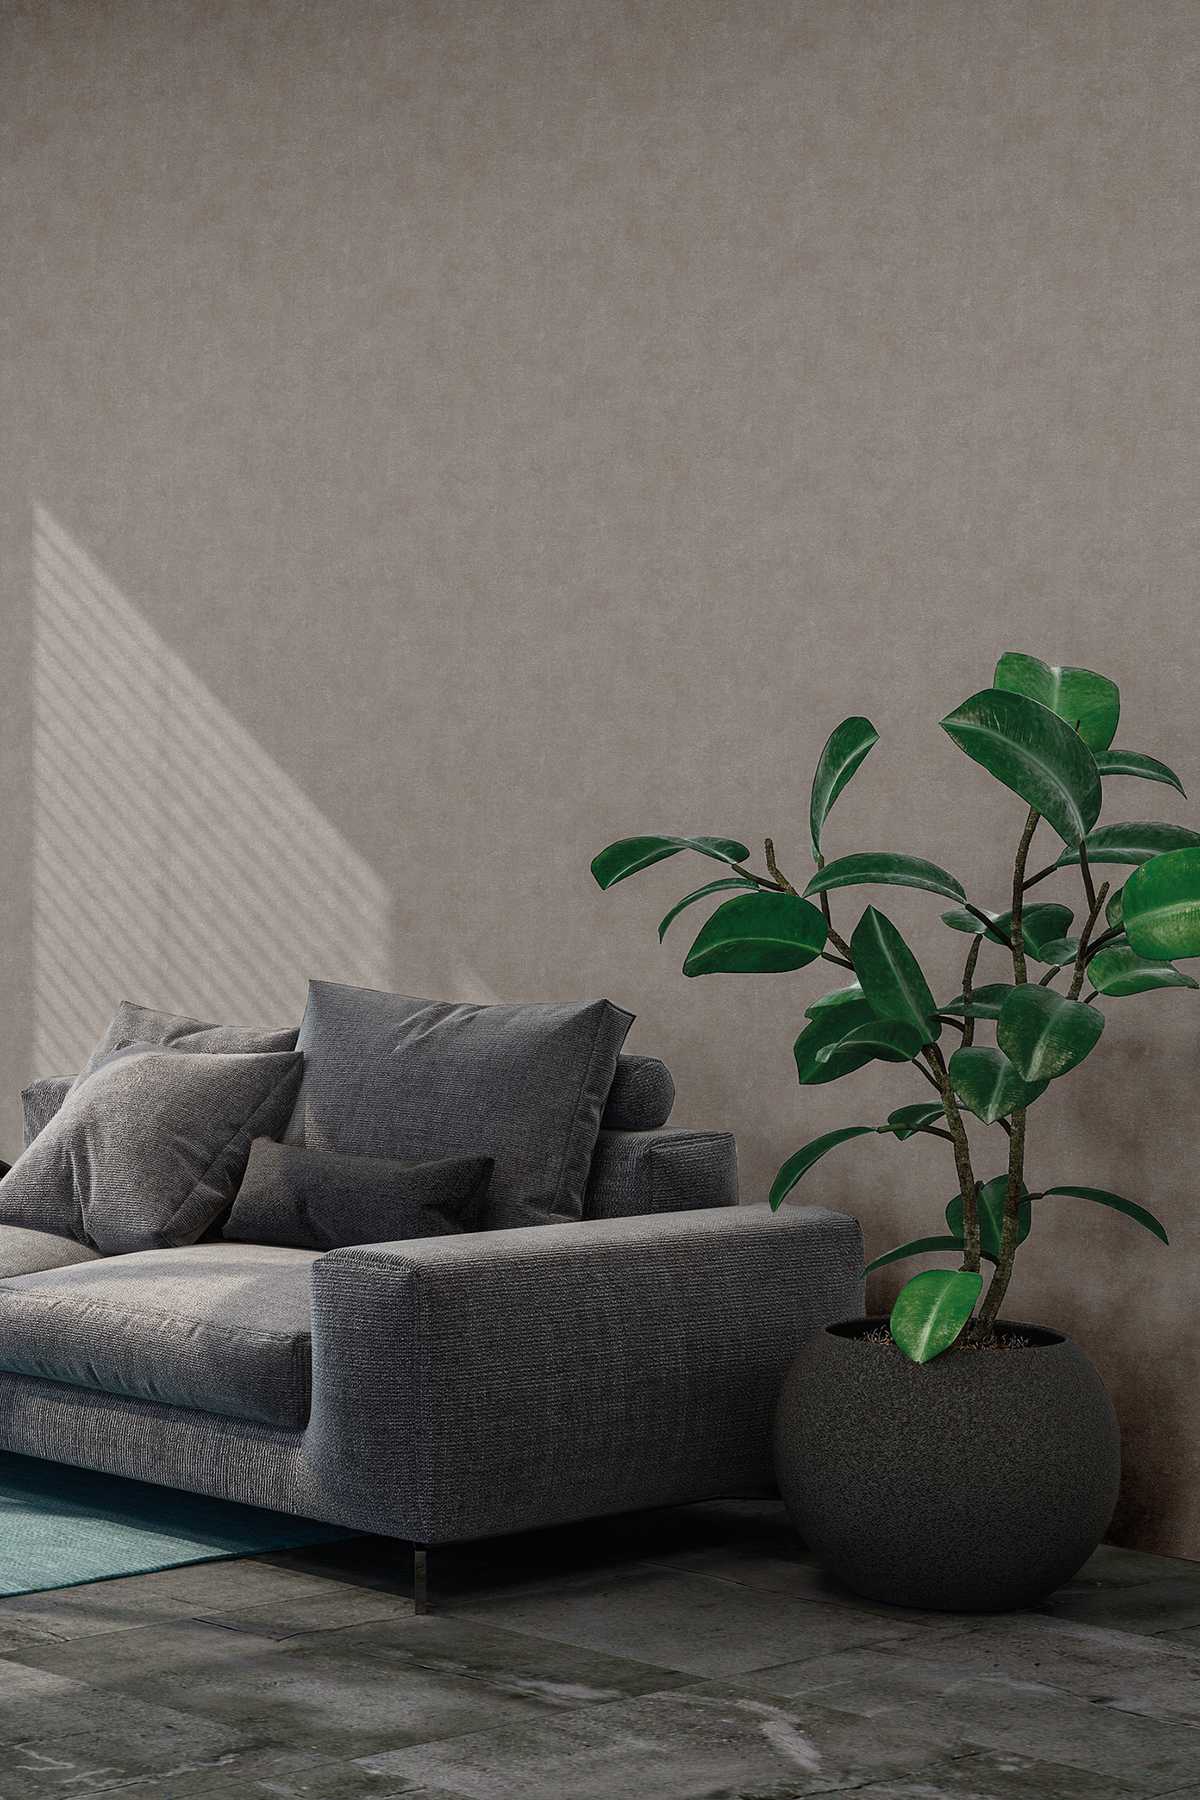             Non-woven wallpaper grey satin texture design in stone look
        